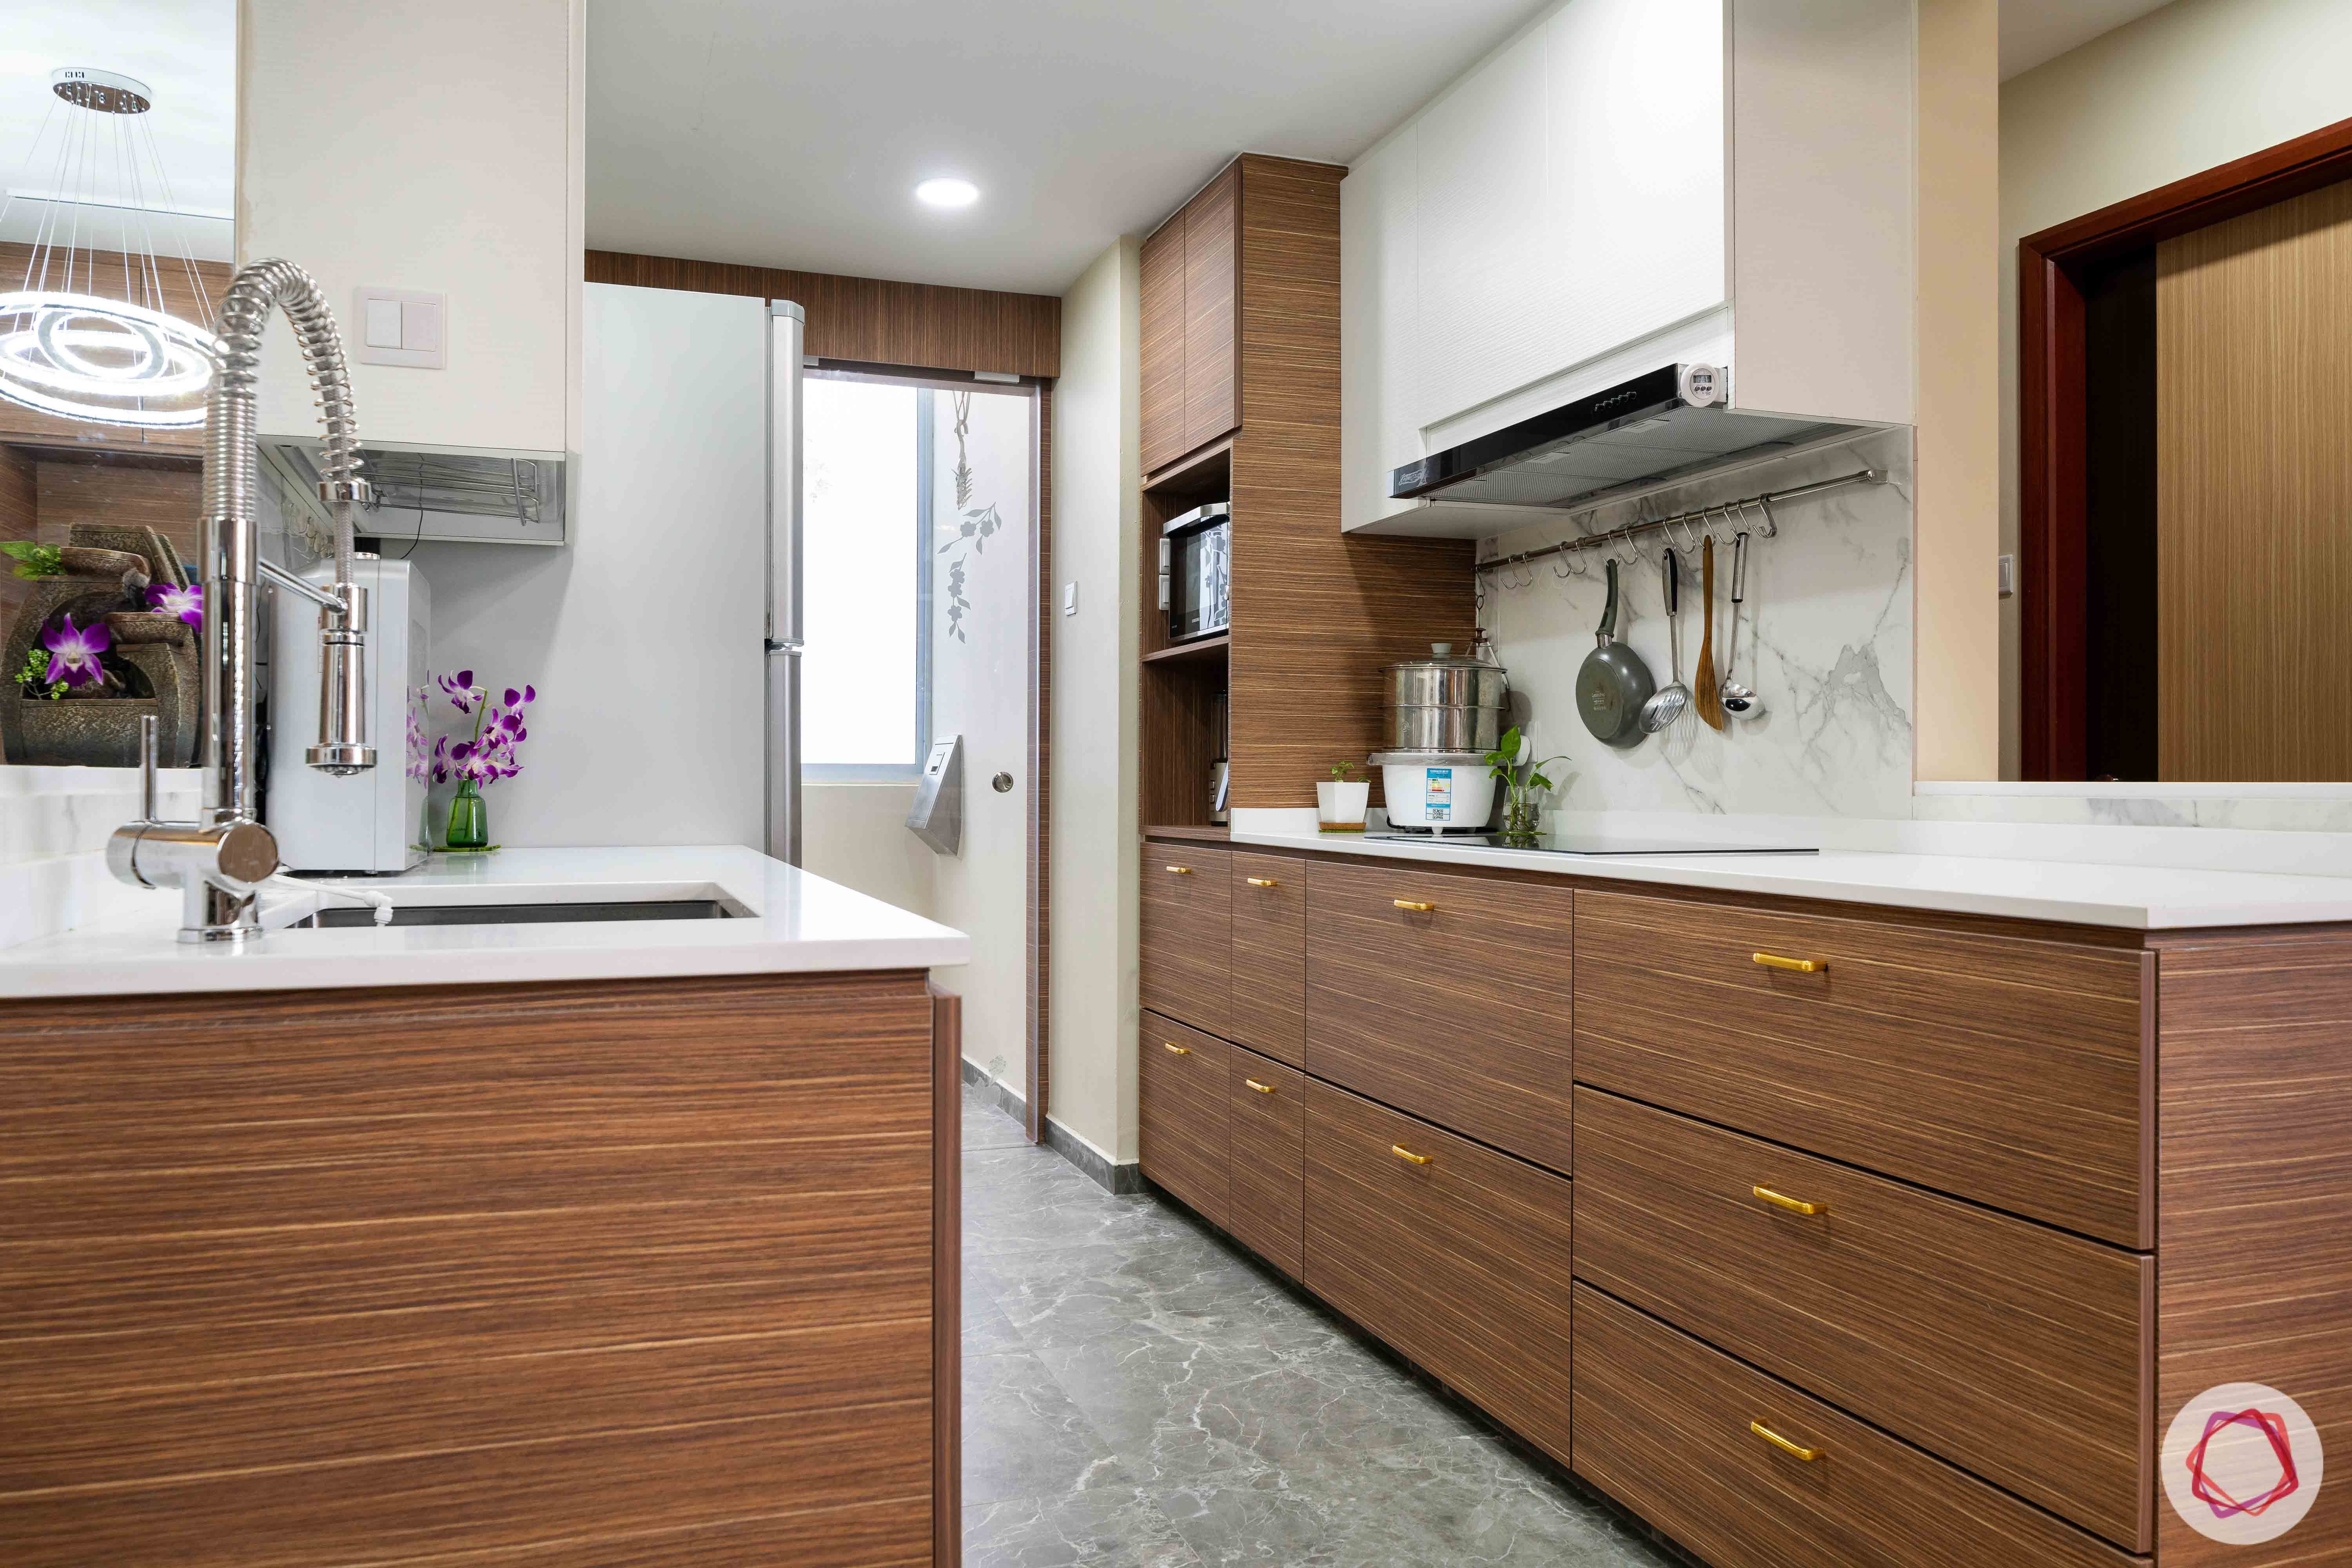 condo-interior-design-singapore-kitchen-cabinets-laminate-gold-handles